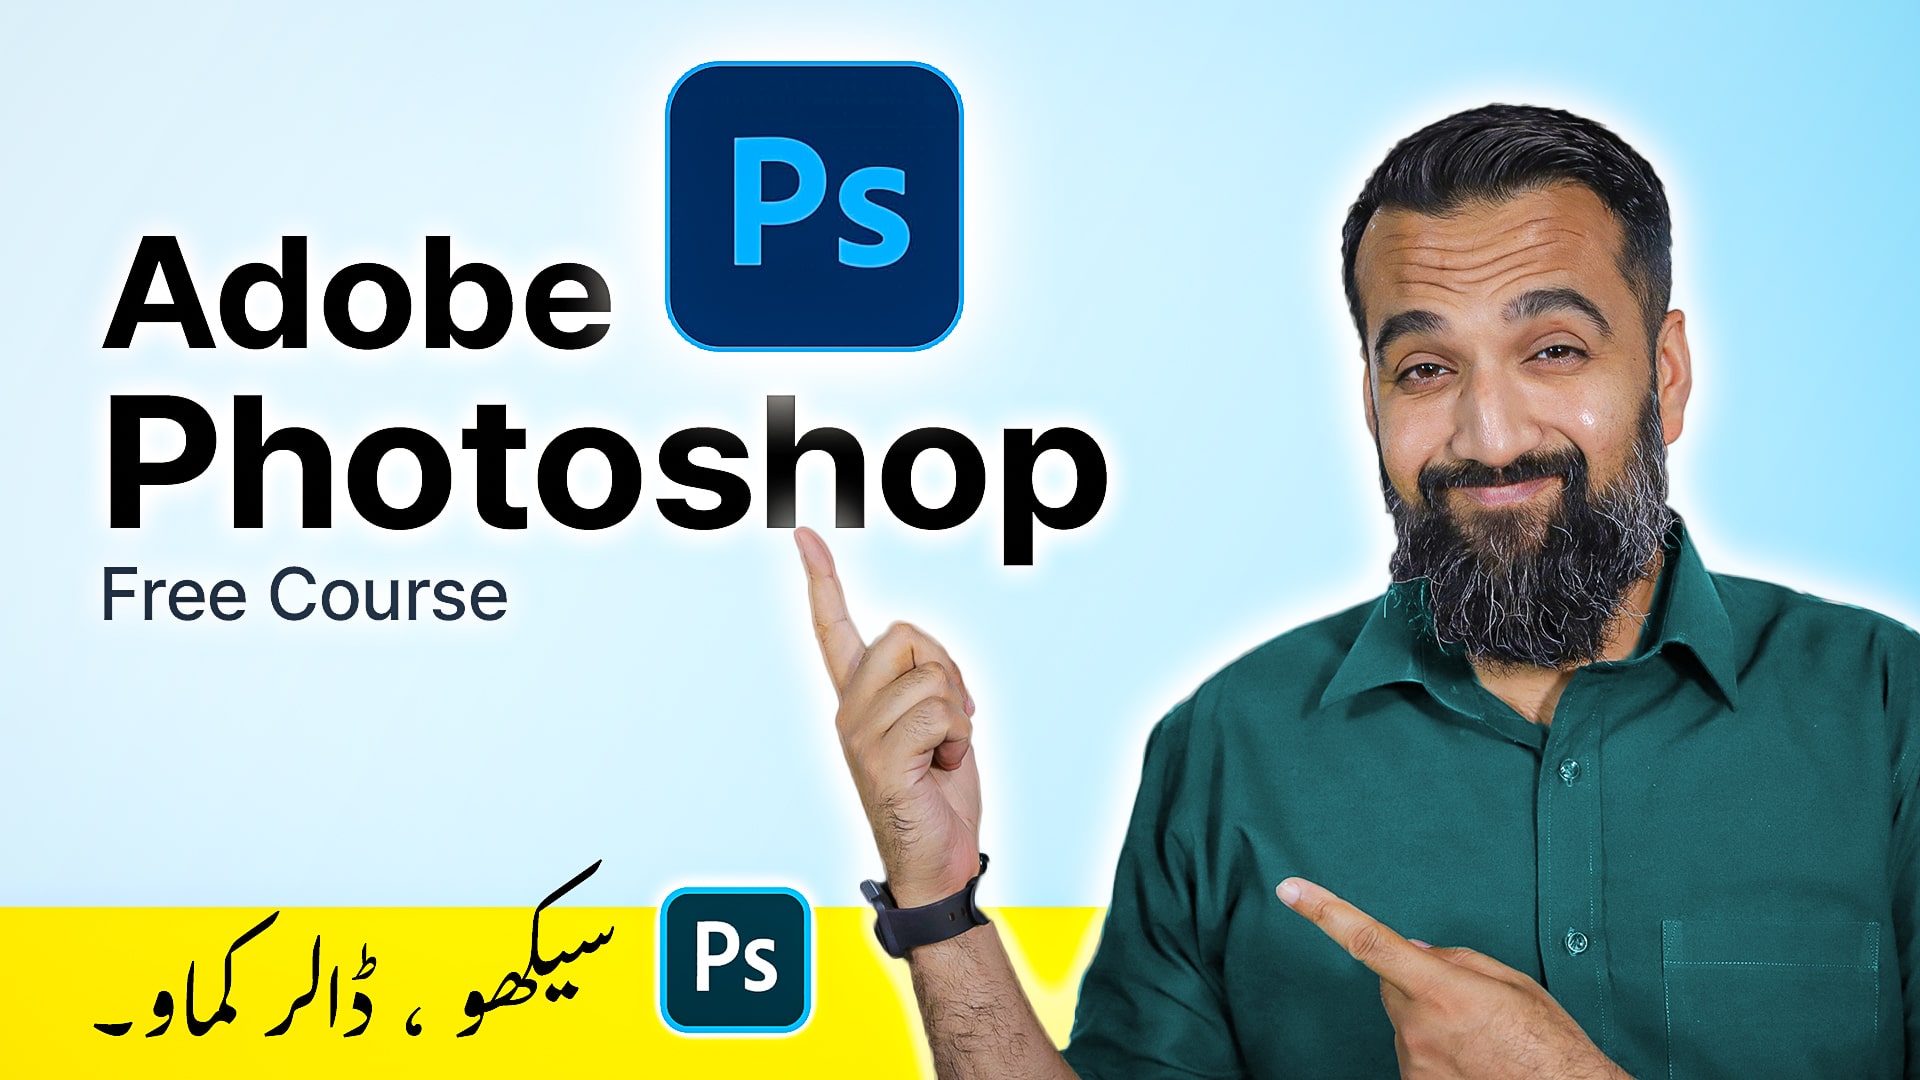  adobe-photoshop-course-for-beginners-graphic-designer-by-azadchaiwala-64f856a86af3b509934764.jpg 